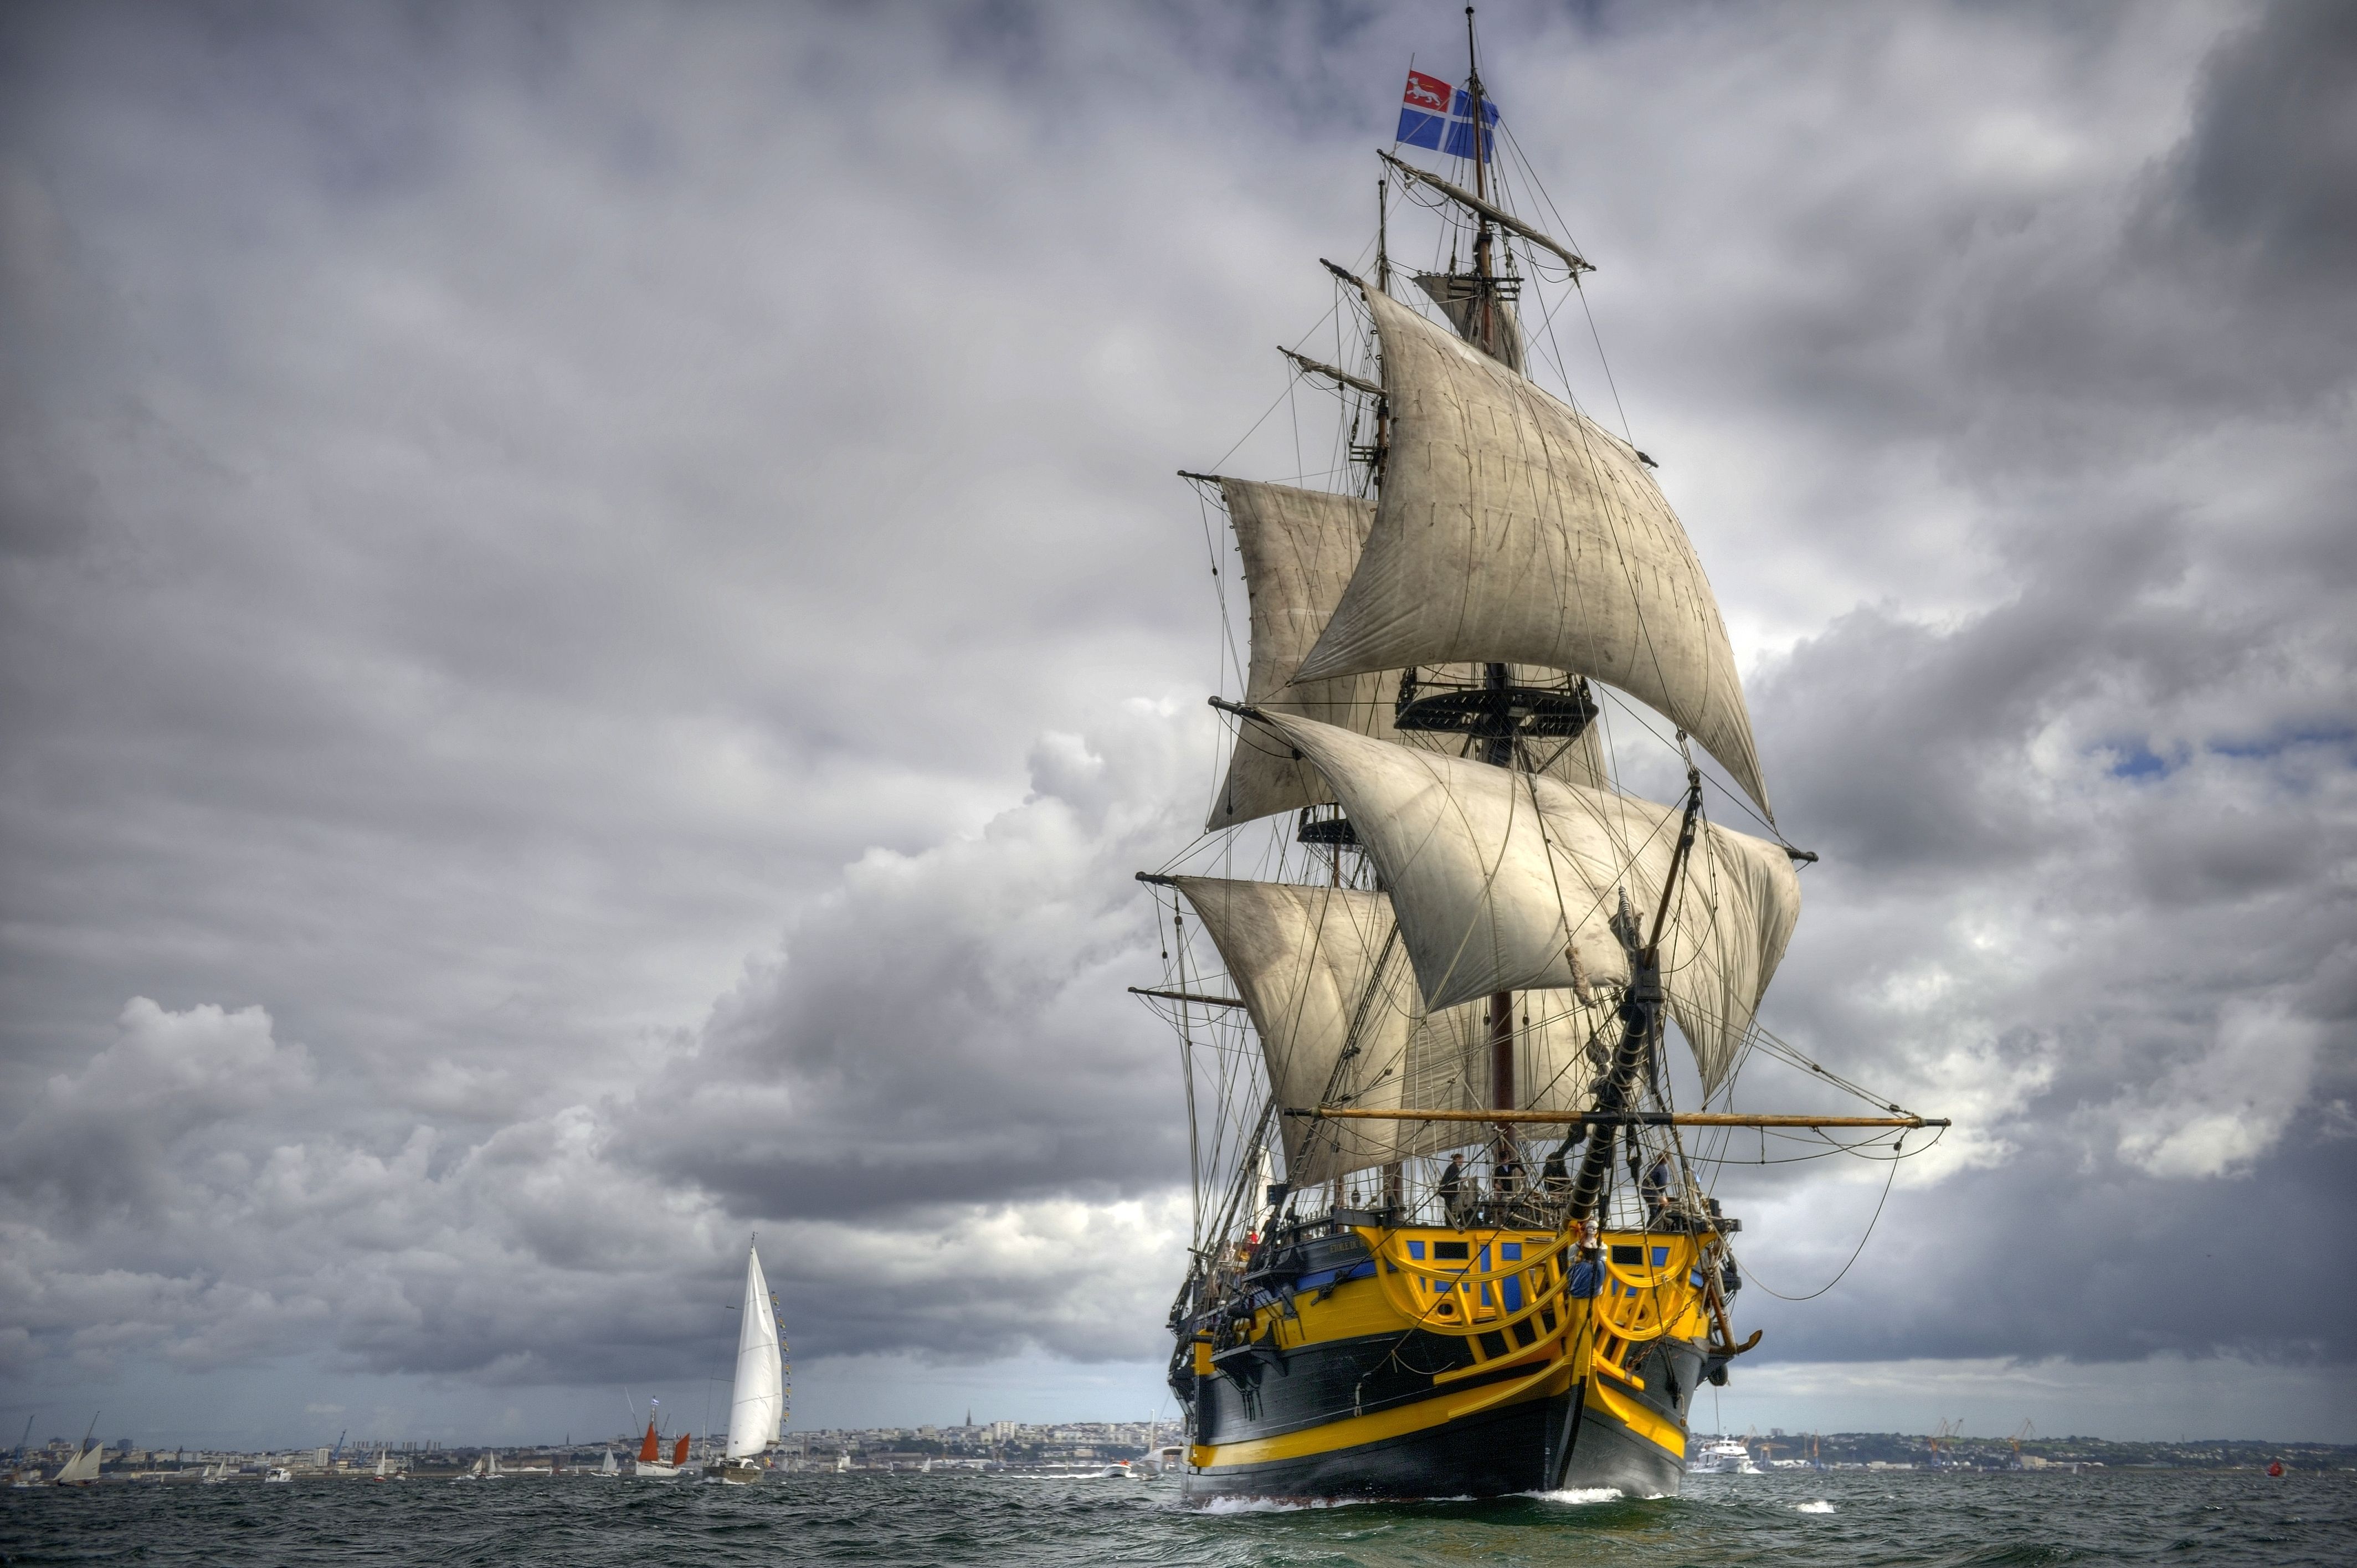 Pin by Игорь Воронов on Tall Ships | Pinterest | Boating and Sailing ...